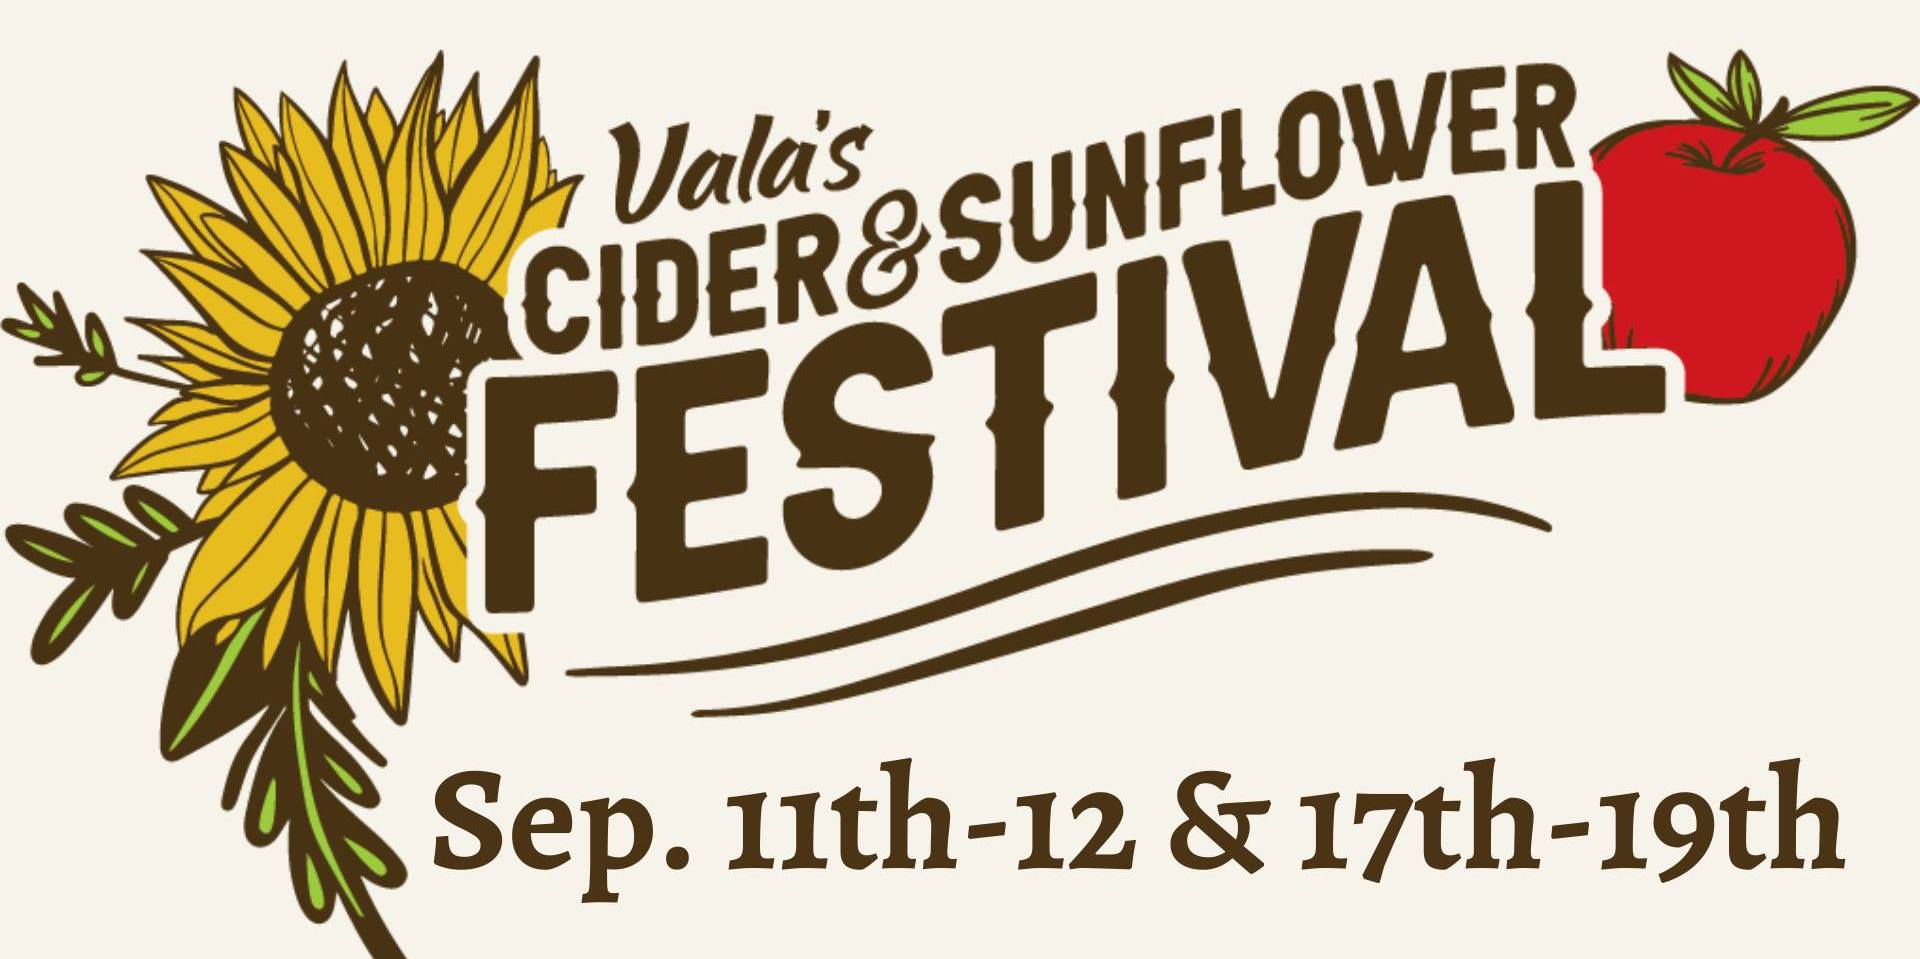 Vala's Cider & Sunflower Festival promotional image